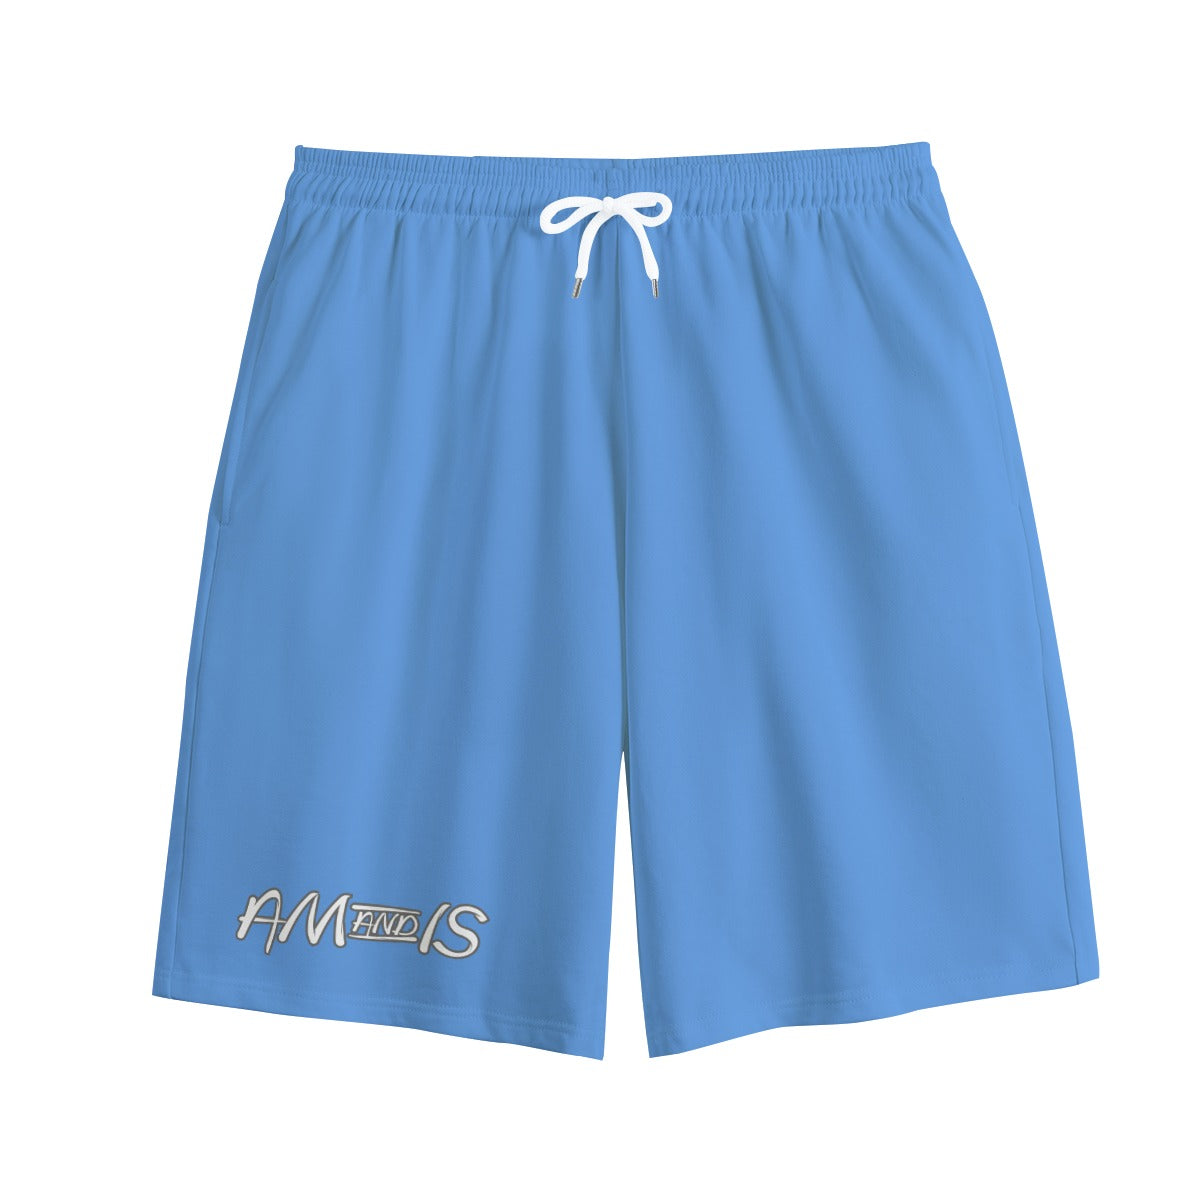 AM&IS Men's Carolina Blue Shorts | 100% Cotton